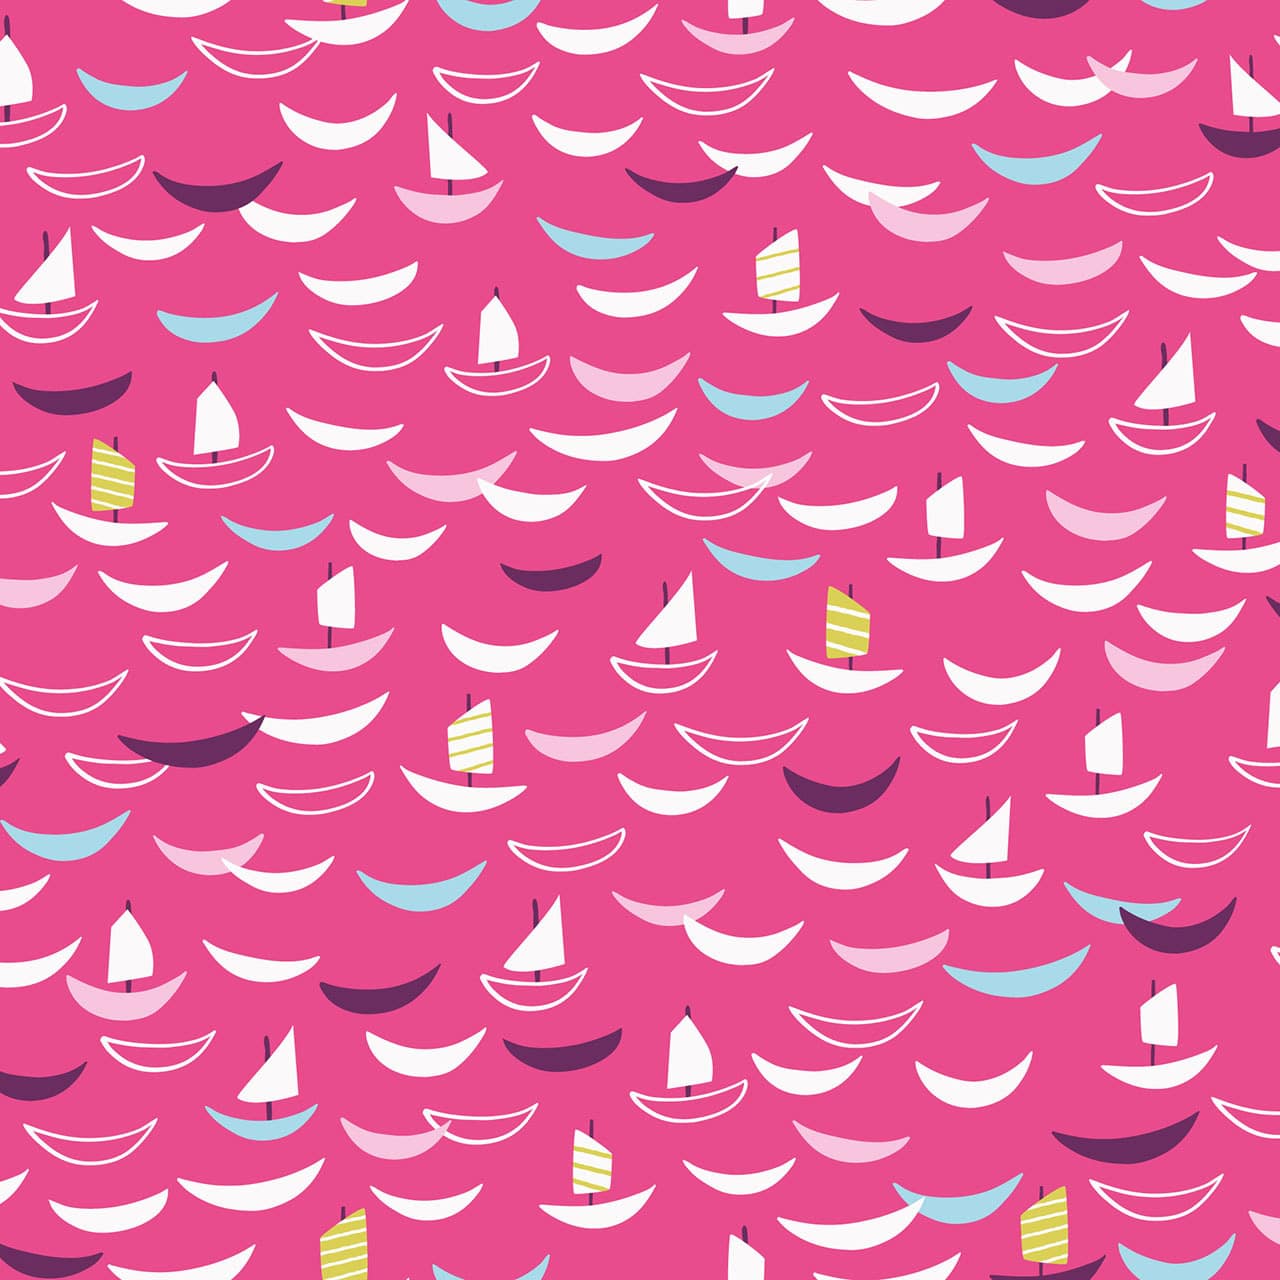 Sail Boats - Silk Roads Fabric Range - Dashwood Studios - Pink